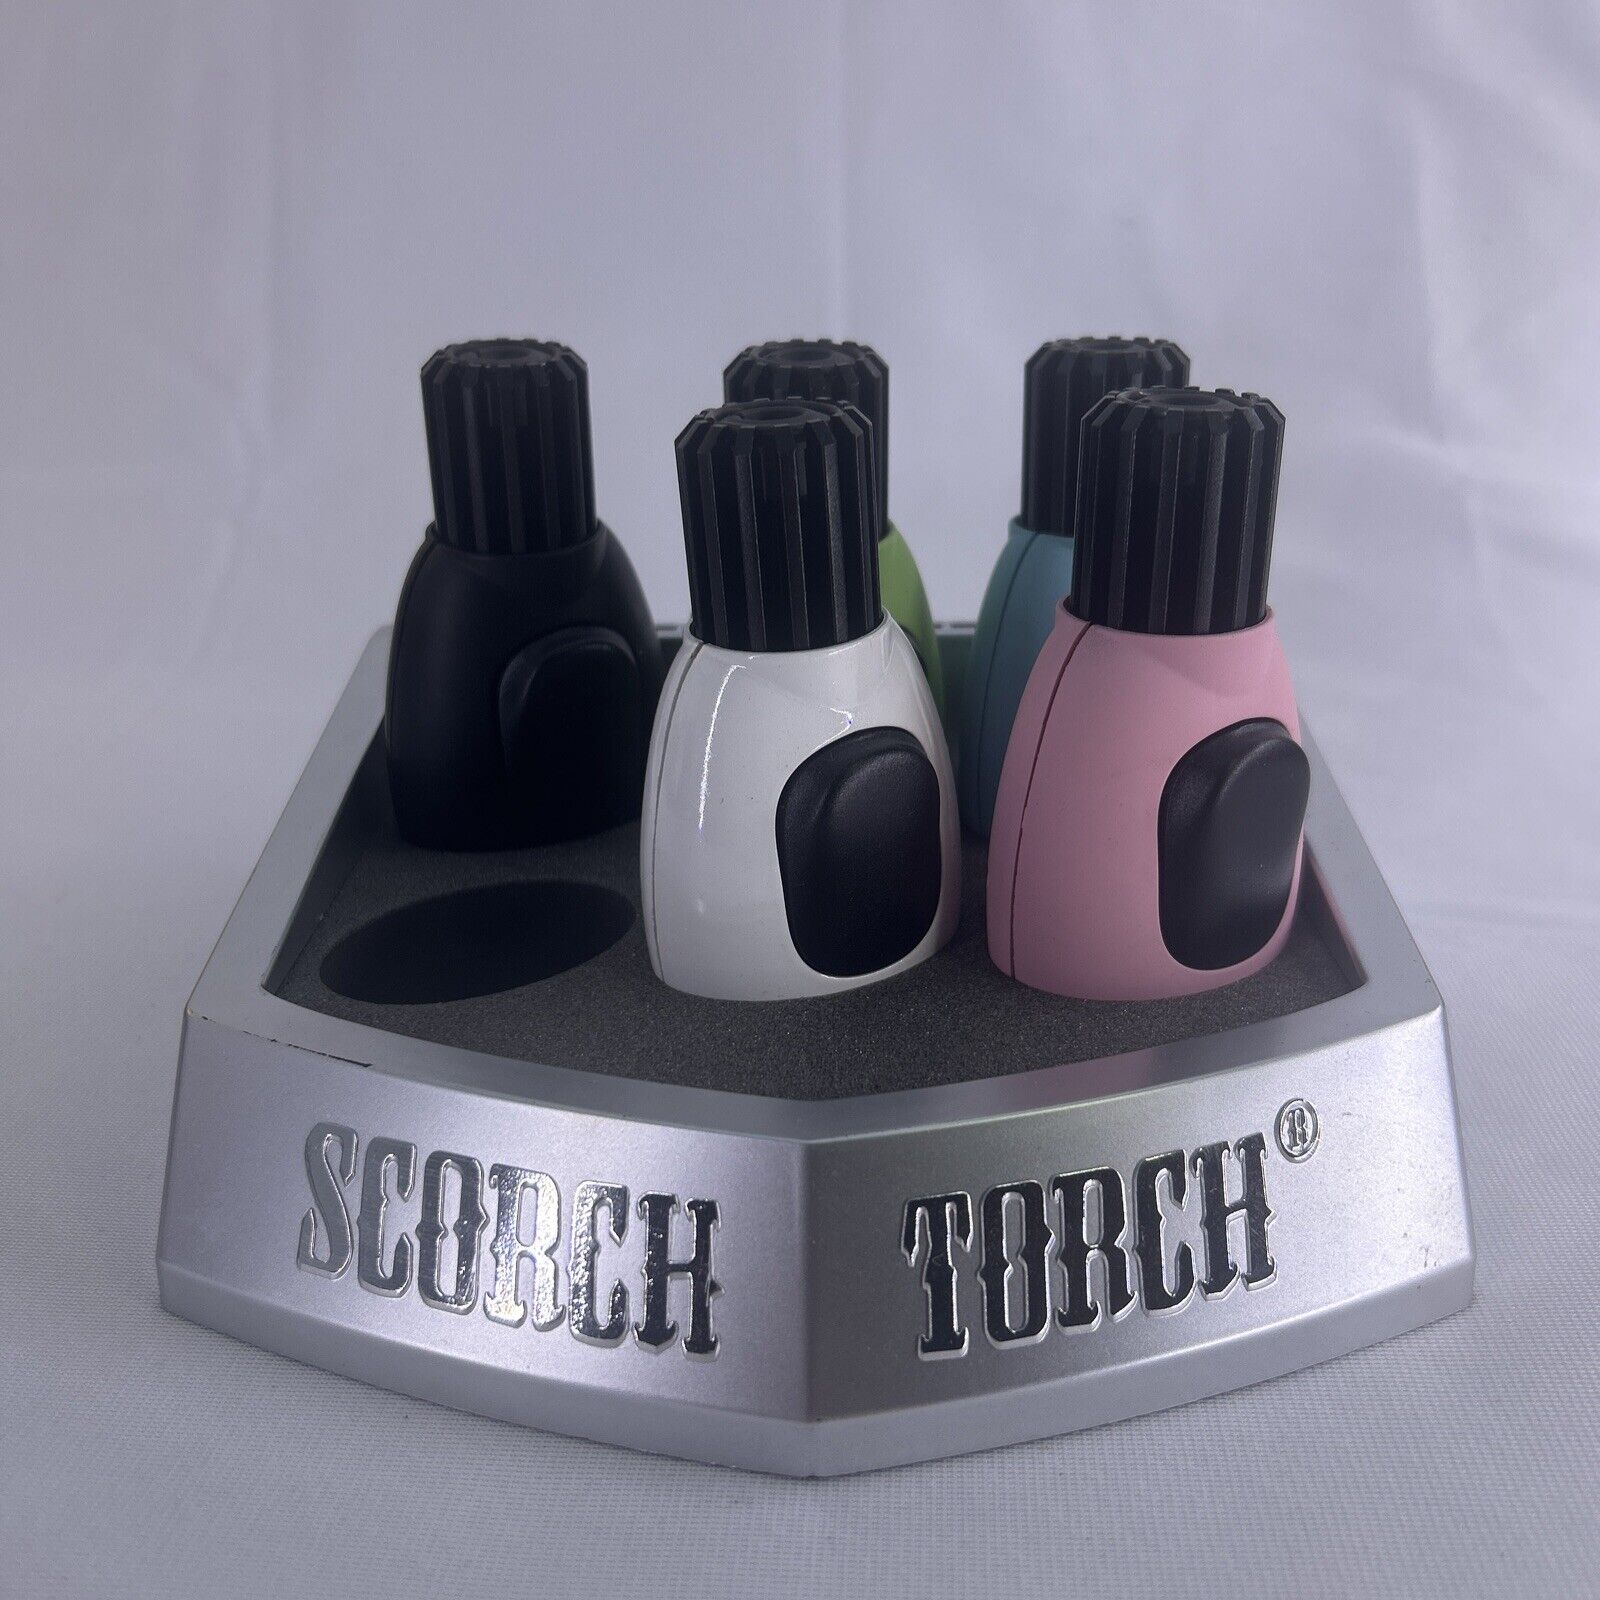 Scorch Torch Butane Torch Lighters Display Of 5 Lot Cigar Smoke Smoking